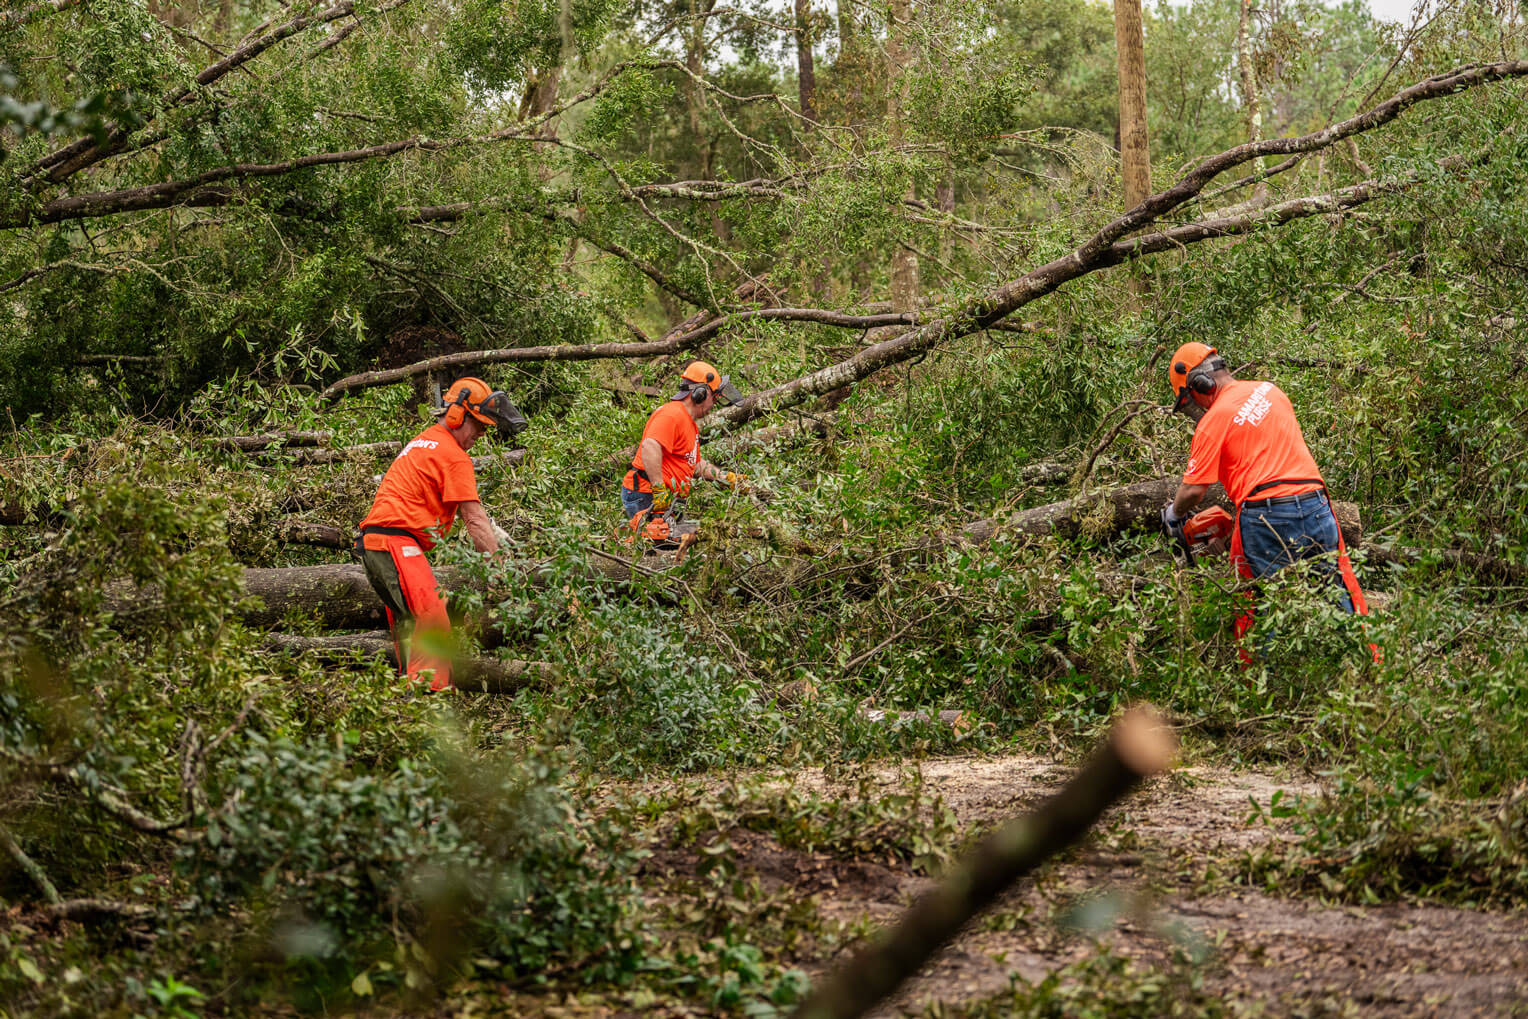 Three Samaritan's Purse volunteers in orange shirts work to cut up and remove a fallen tree in a yard in Florida.